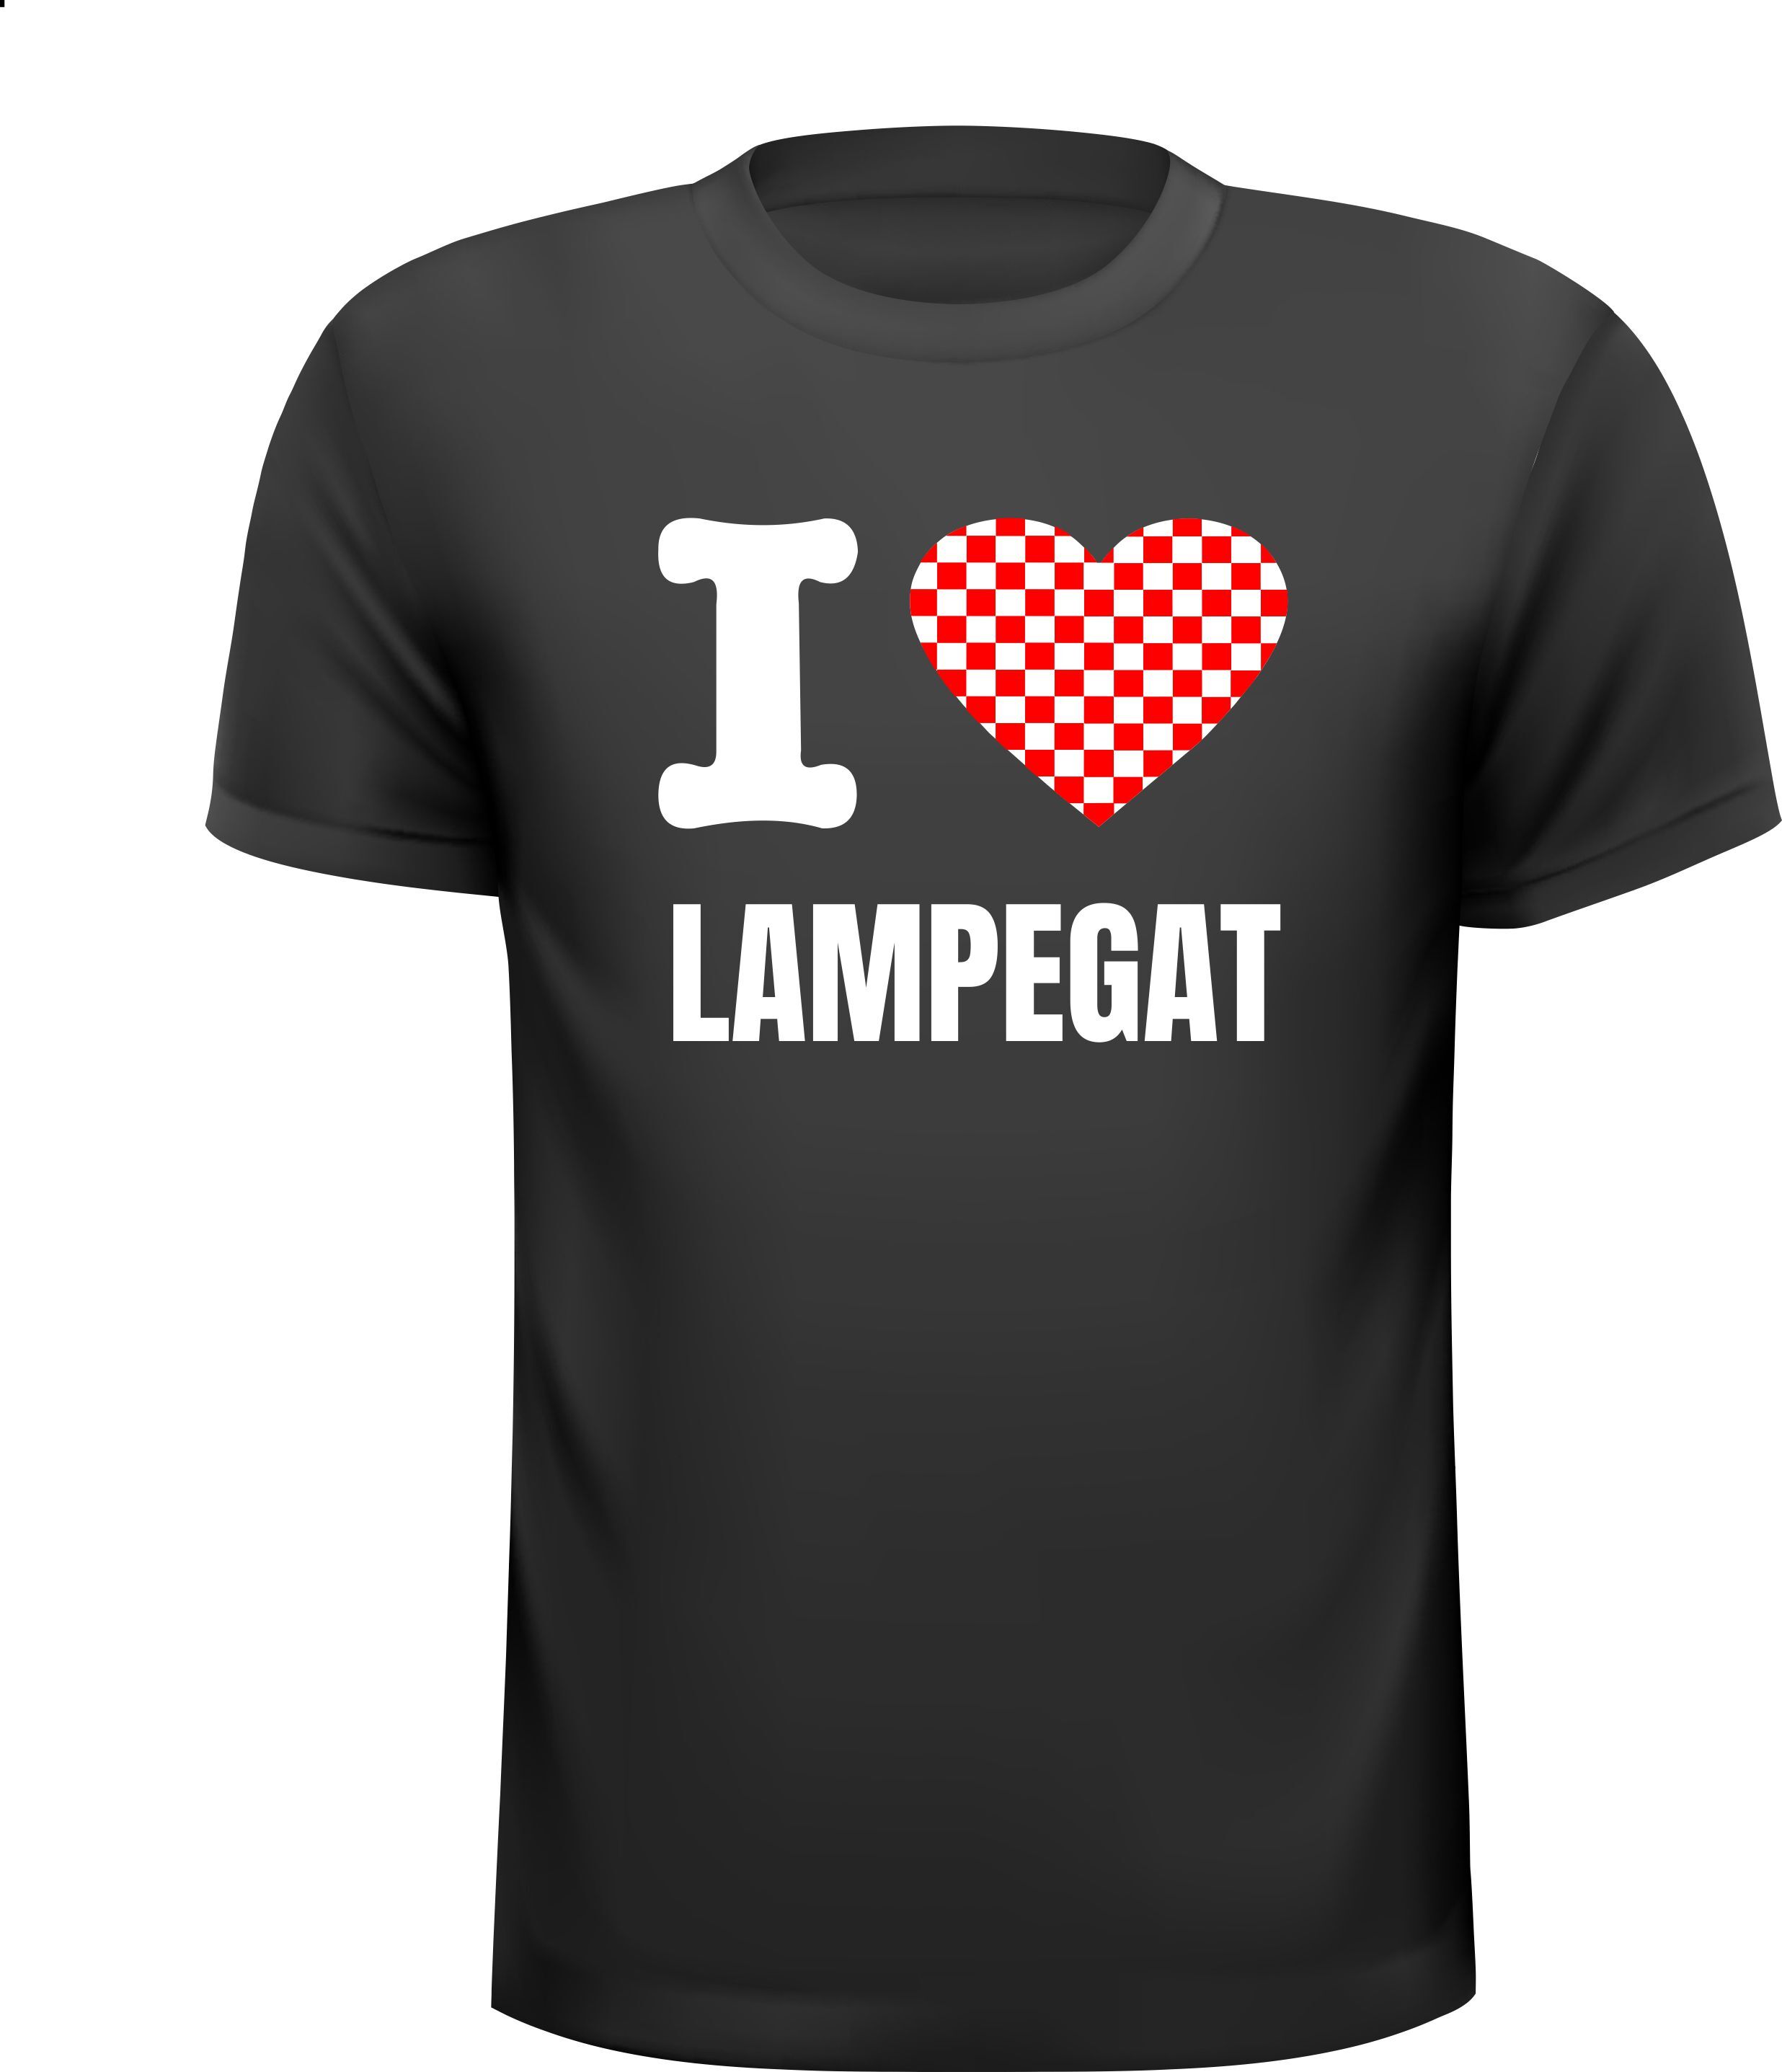 T-shirt i love Lampegat Leuk Carnaval shirtje